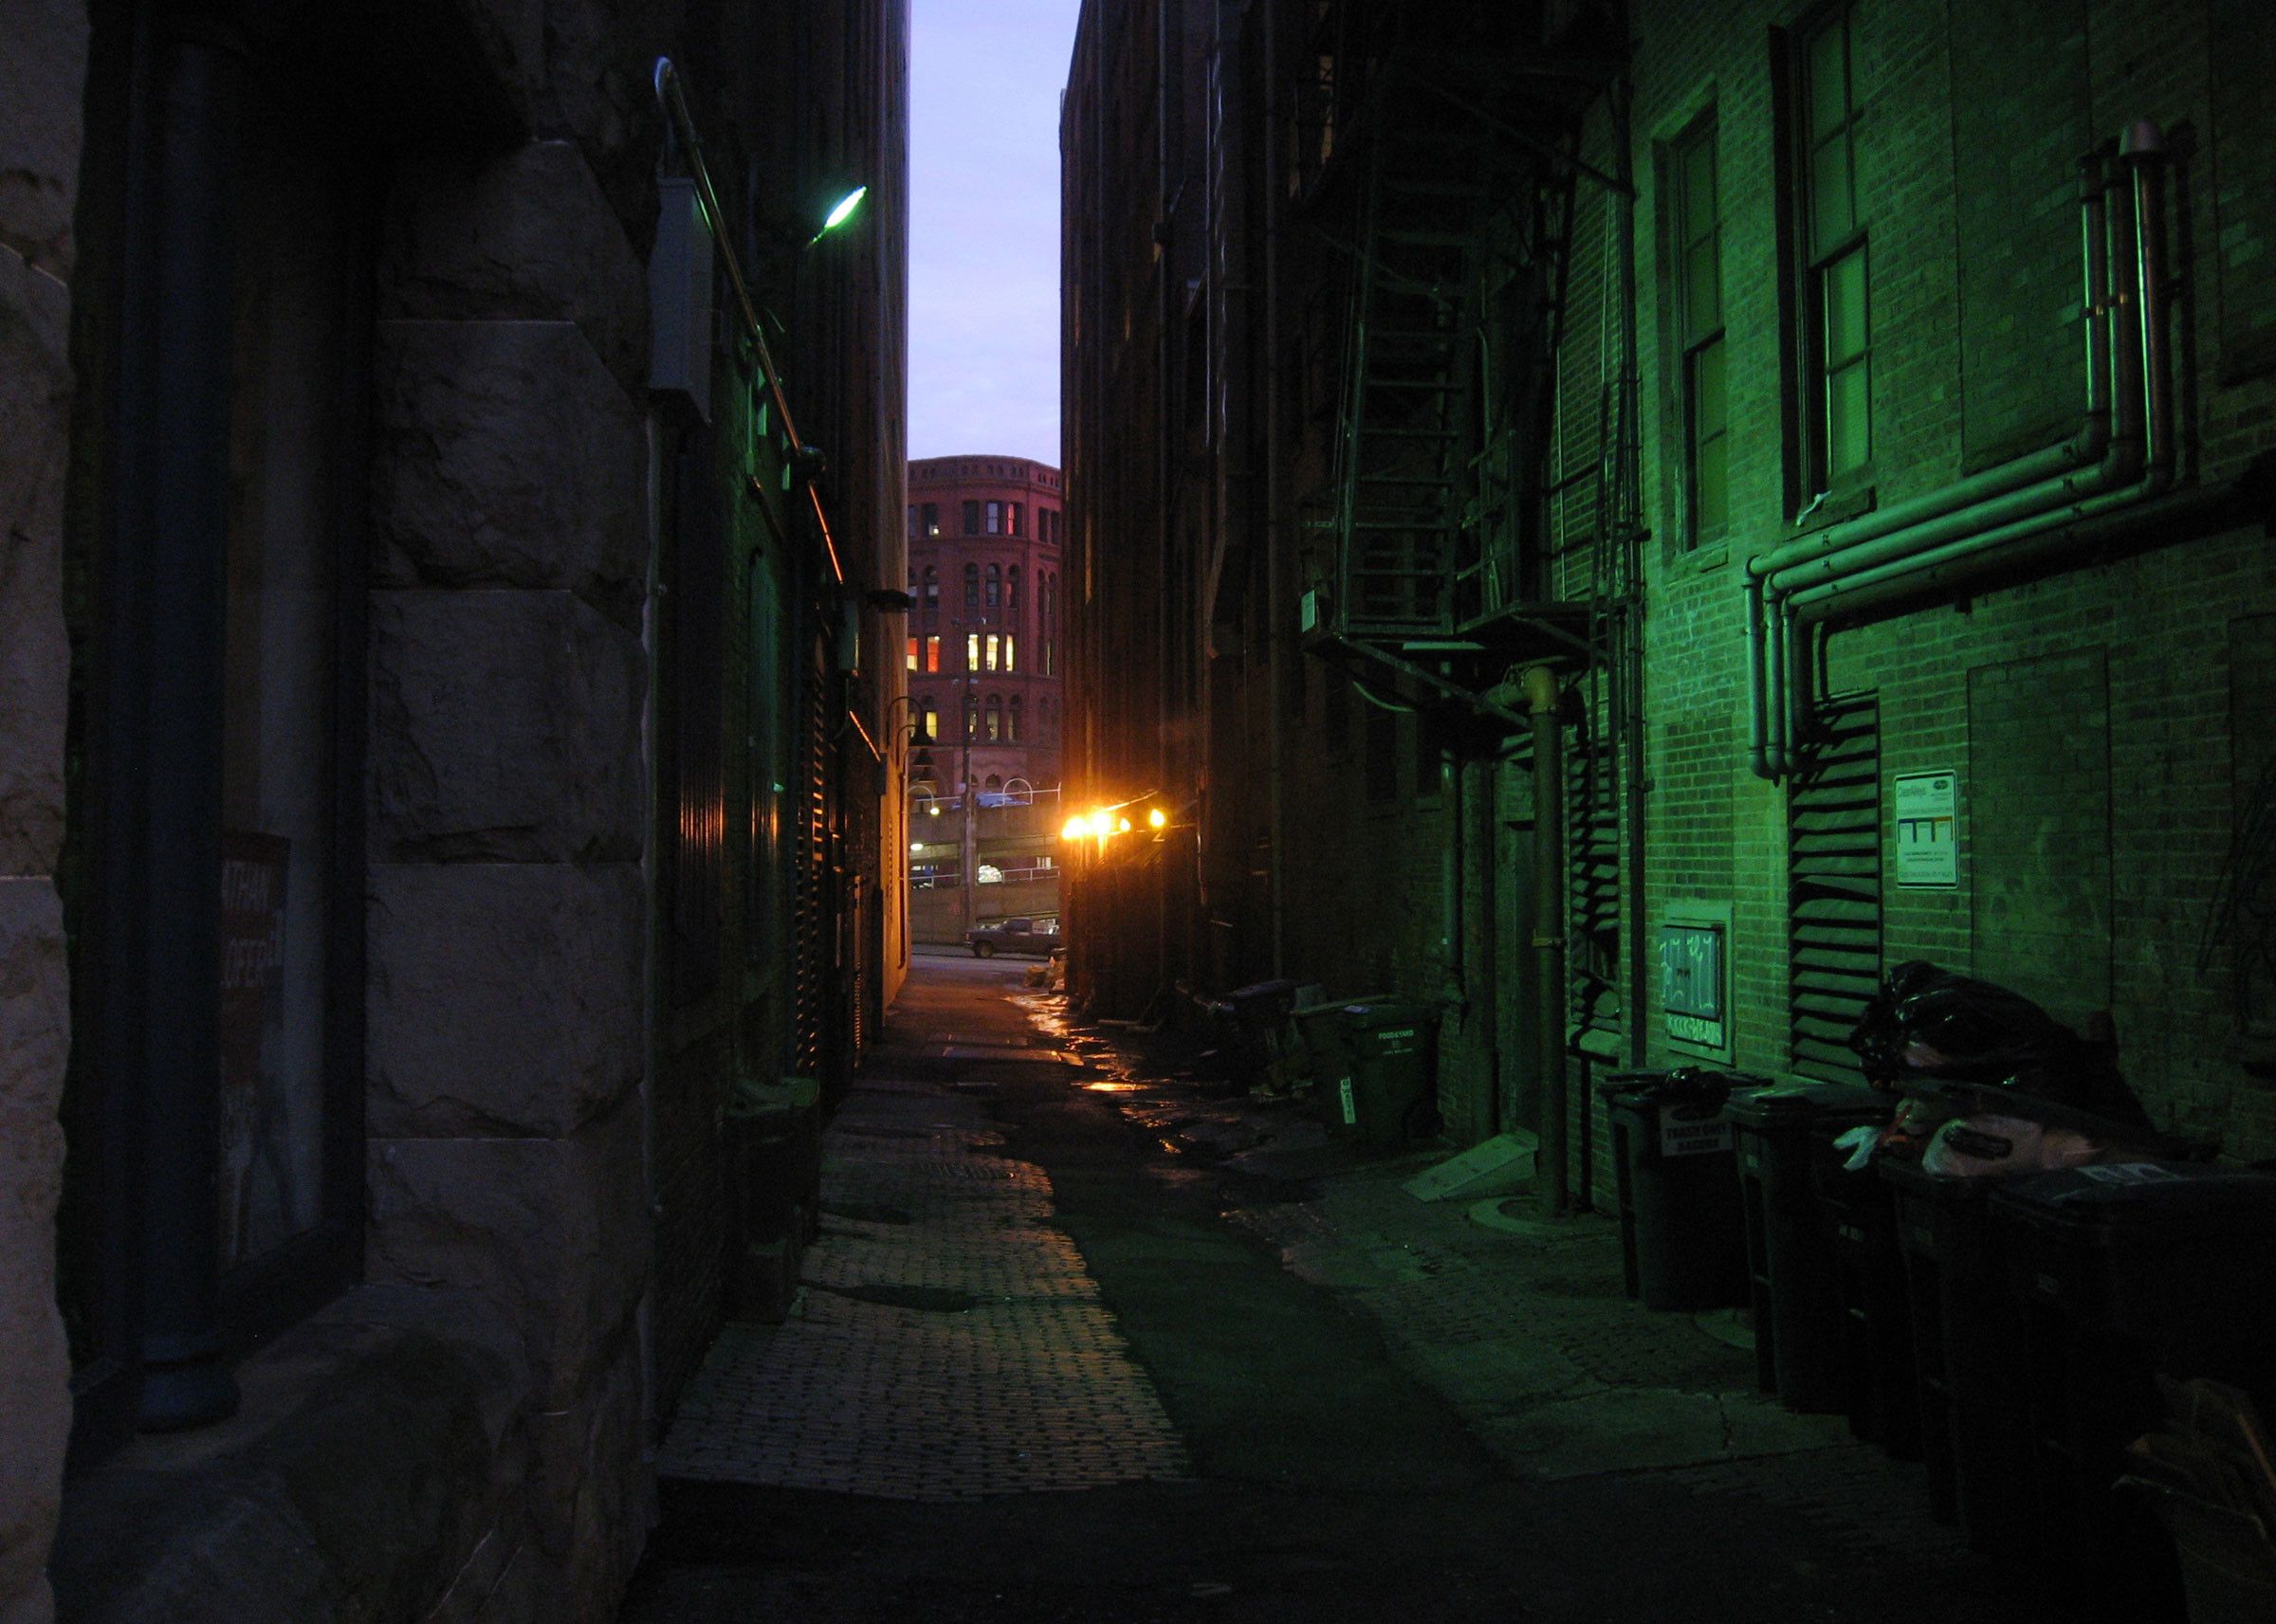 Alleyway Background